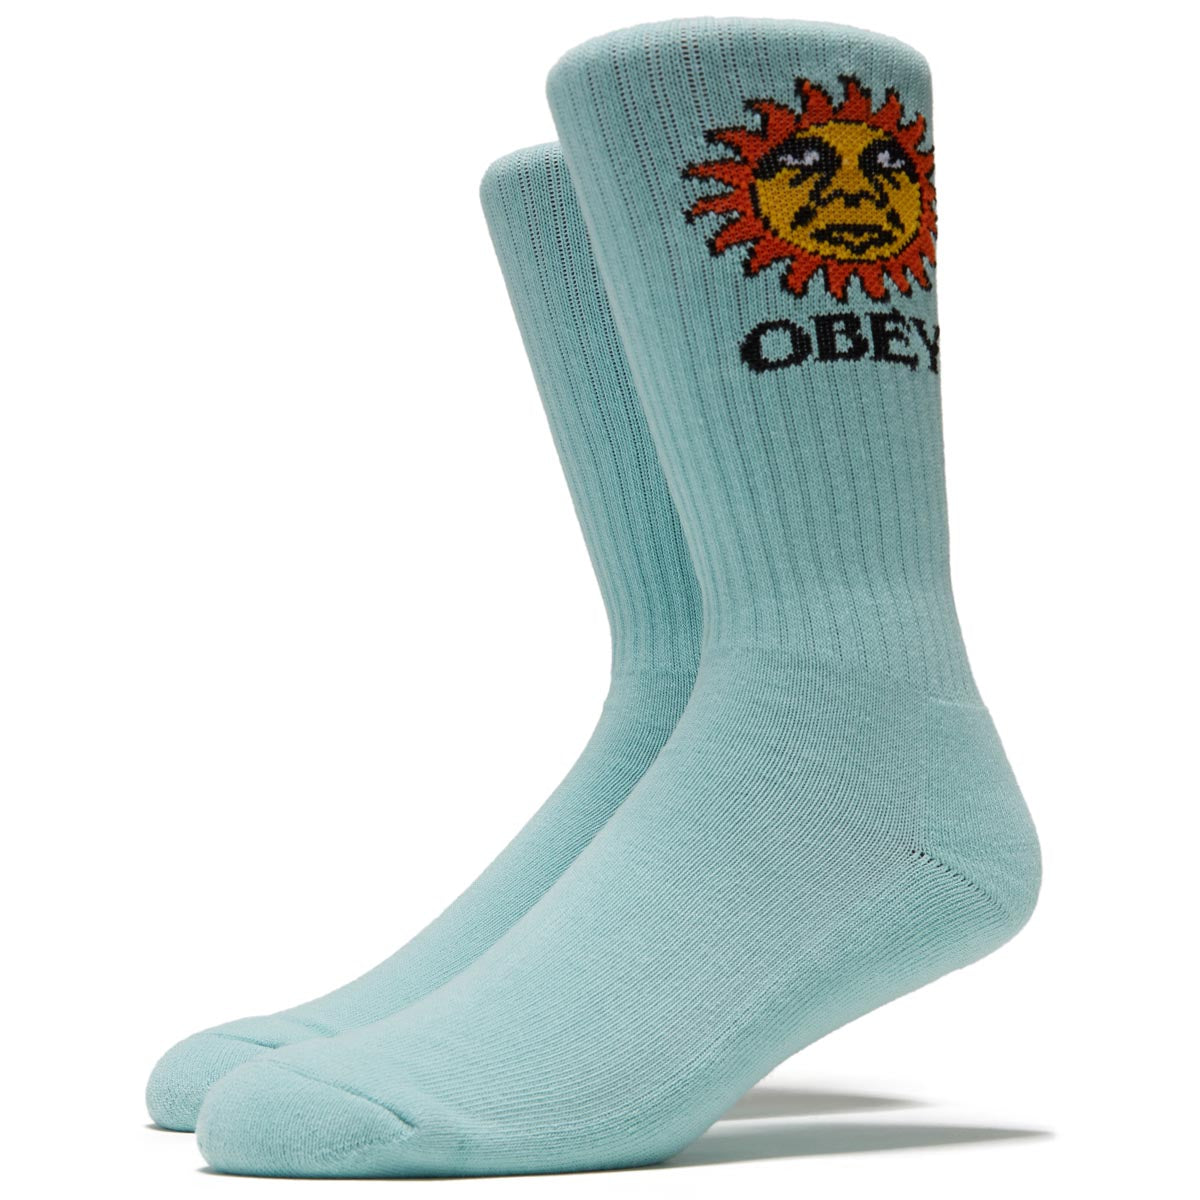 Obey Sunshine Socks - Surf Spray image 1